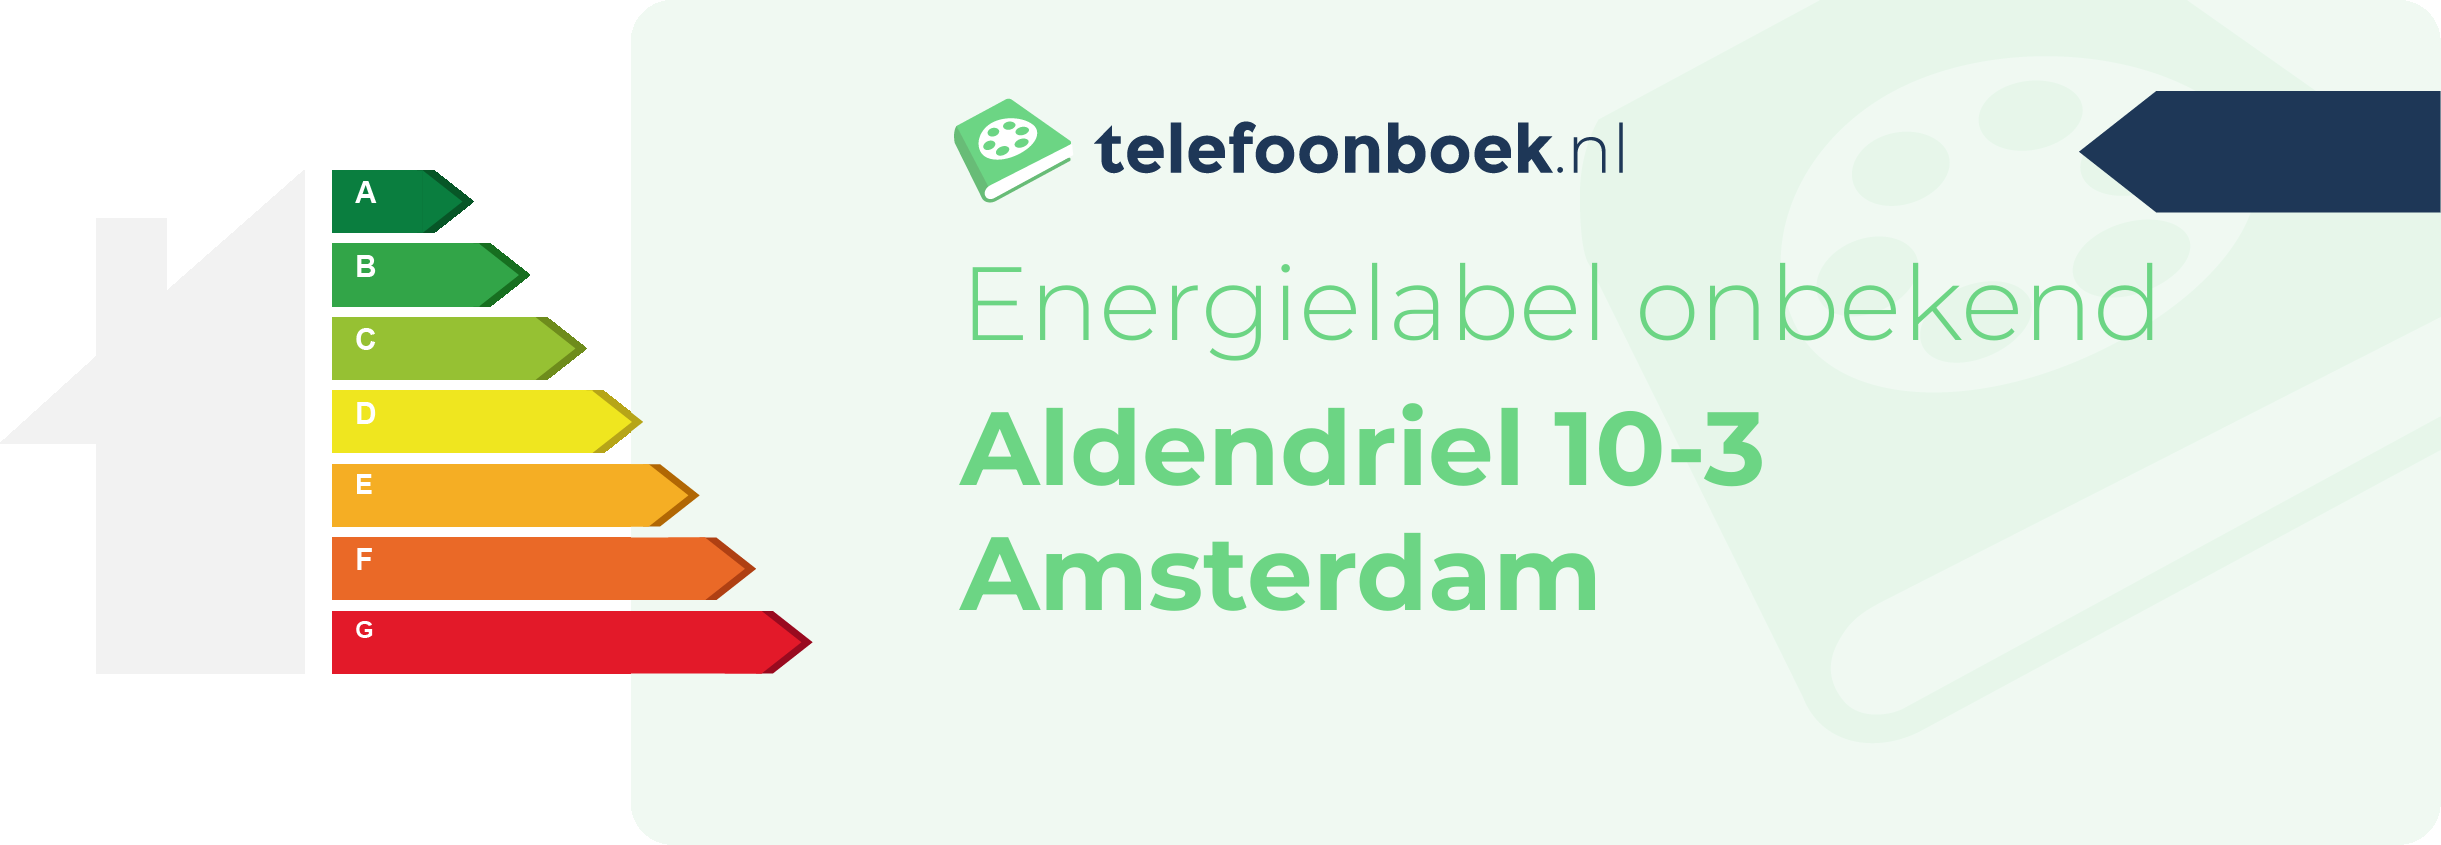 Energielabel Aldendriel 10-3 Amsterdam